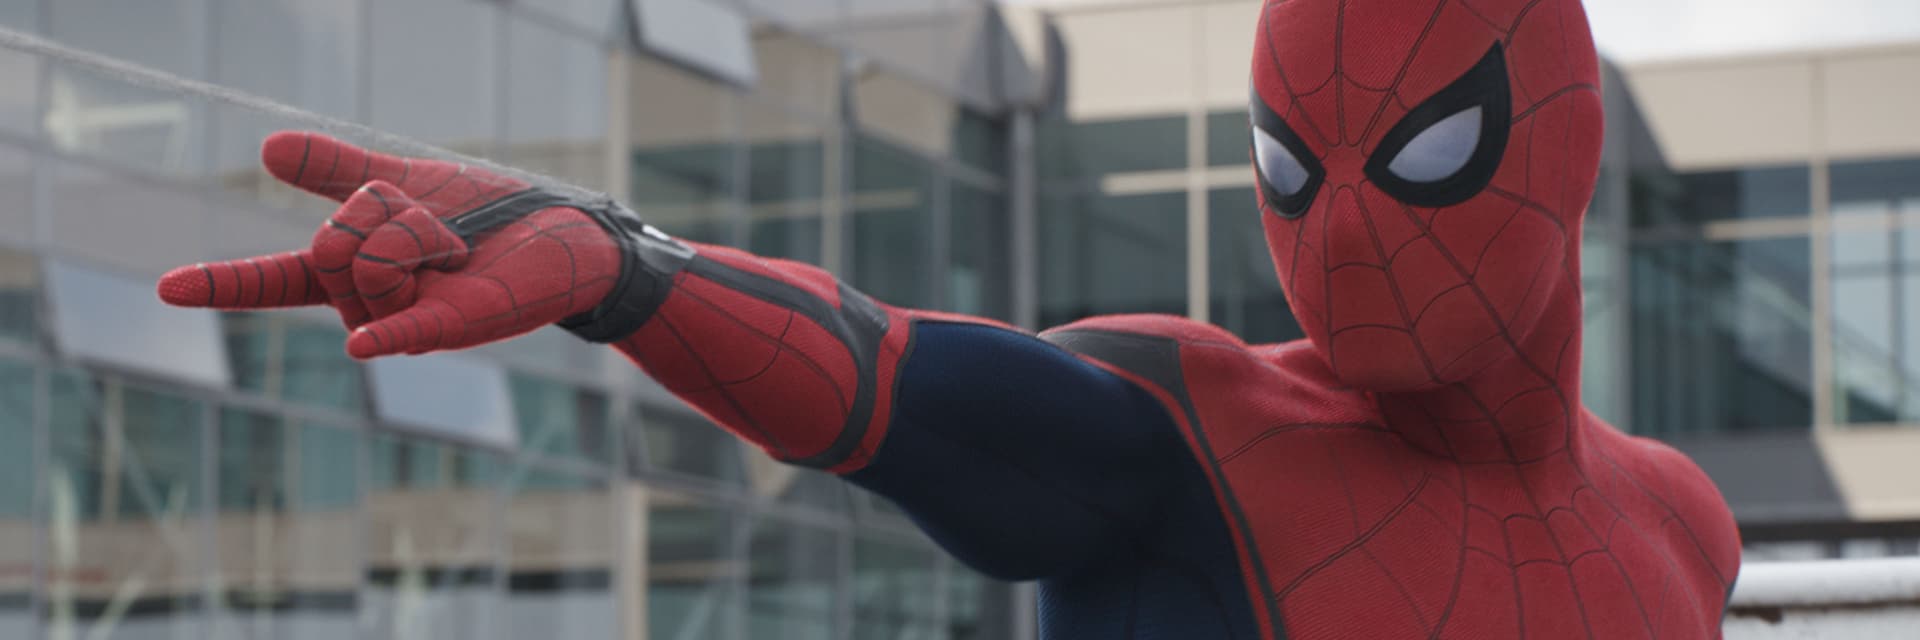 Spider-Man shooting web